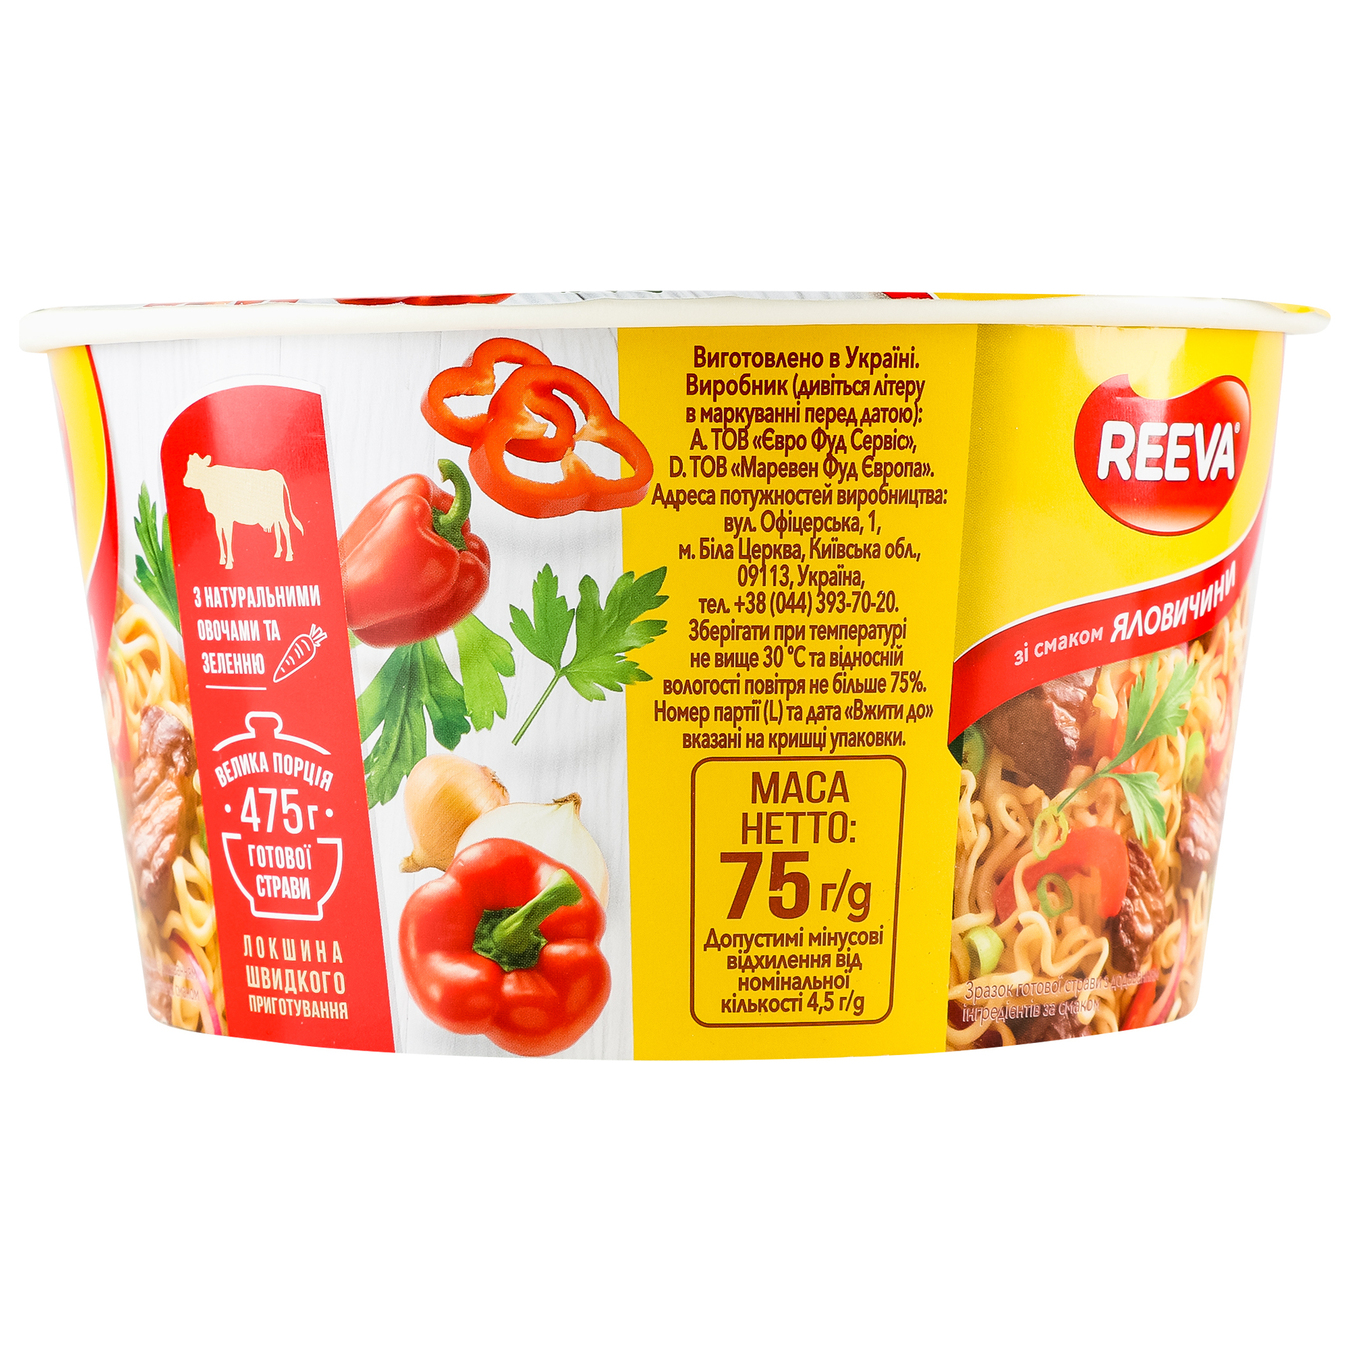 Reeva instant noodles with beef flavor 75g 5